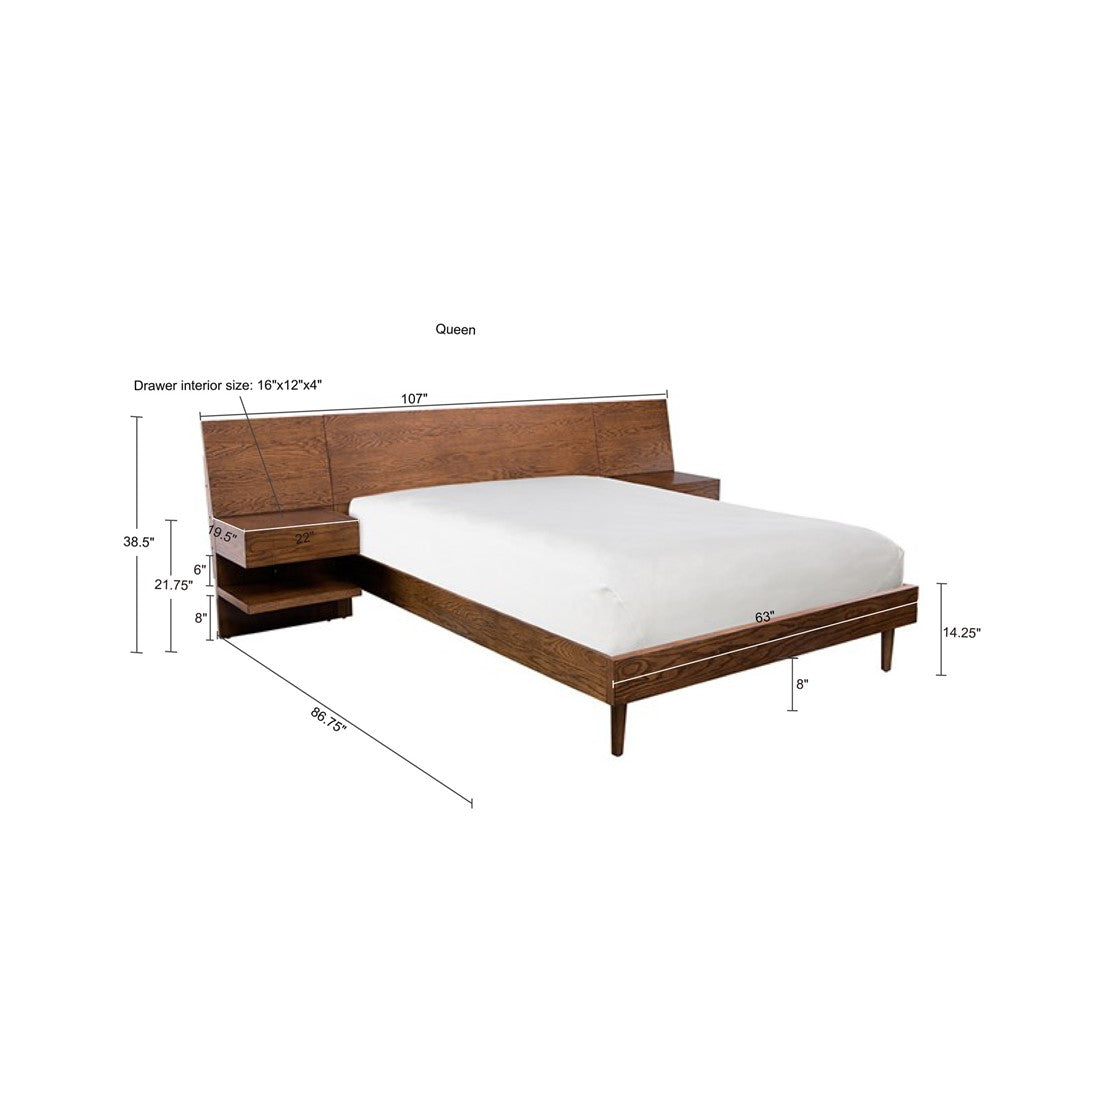 Clark Bed + 2 Attached Nightstands